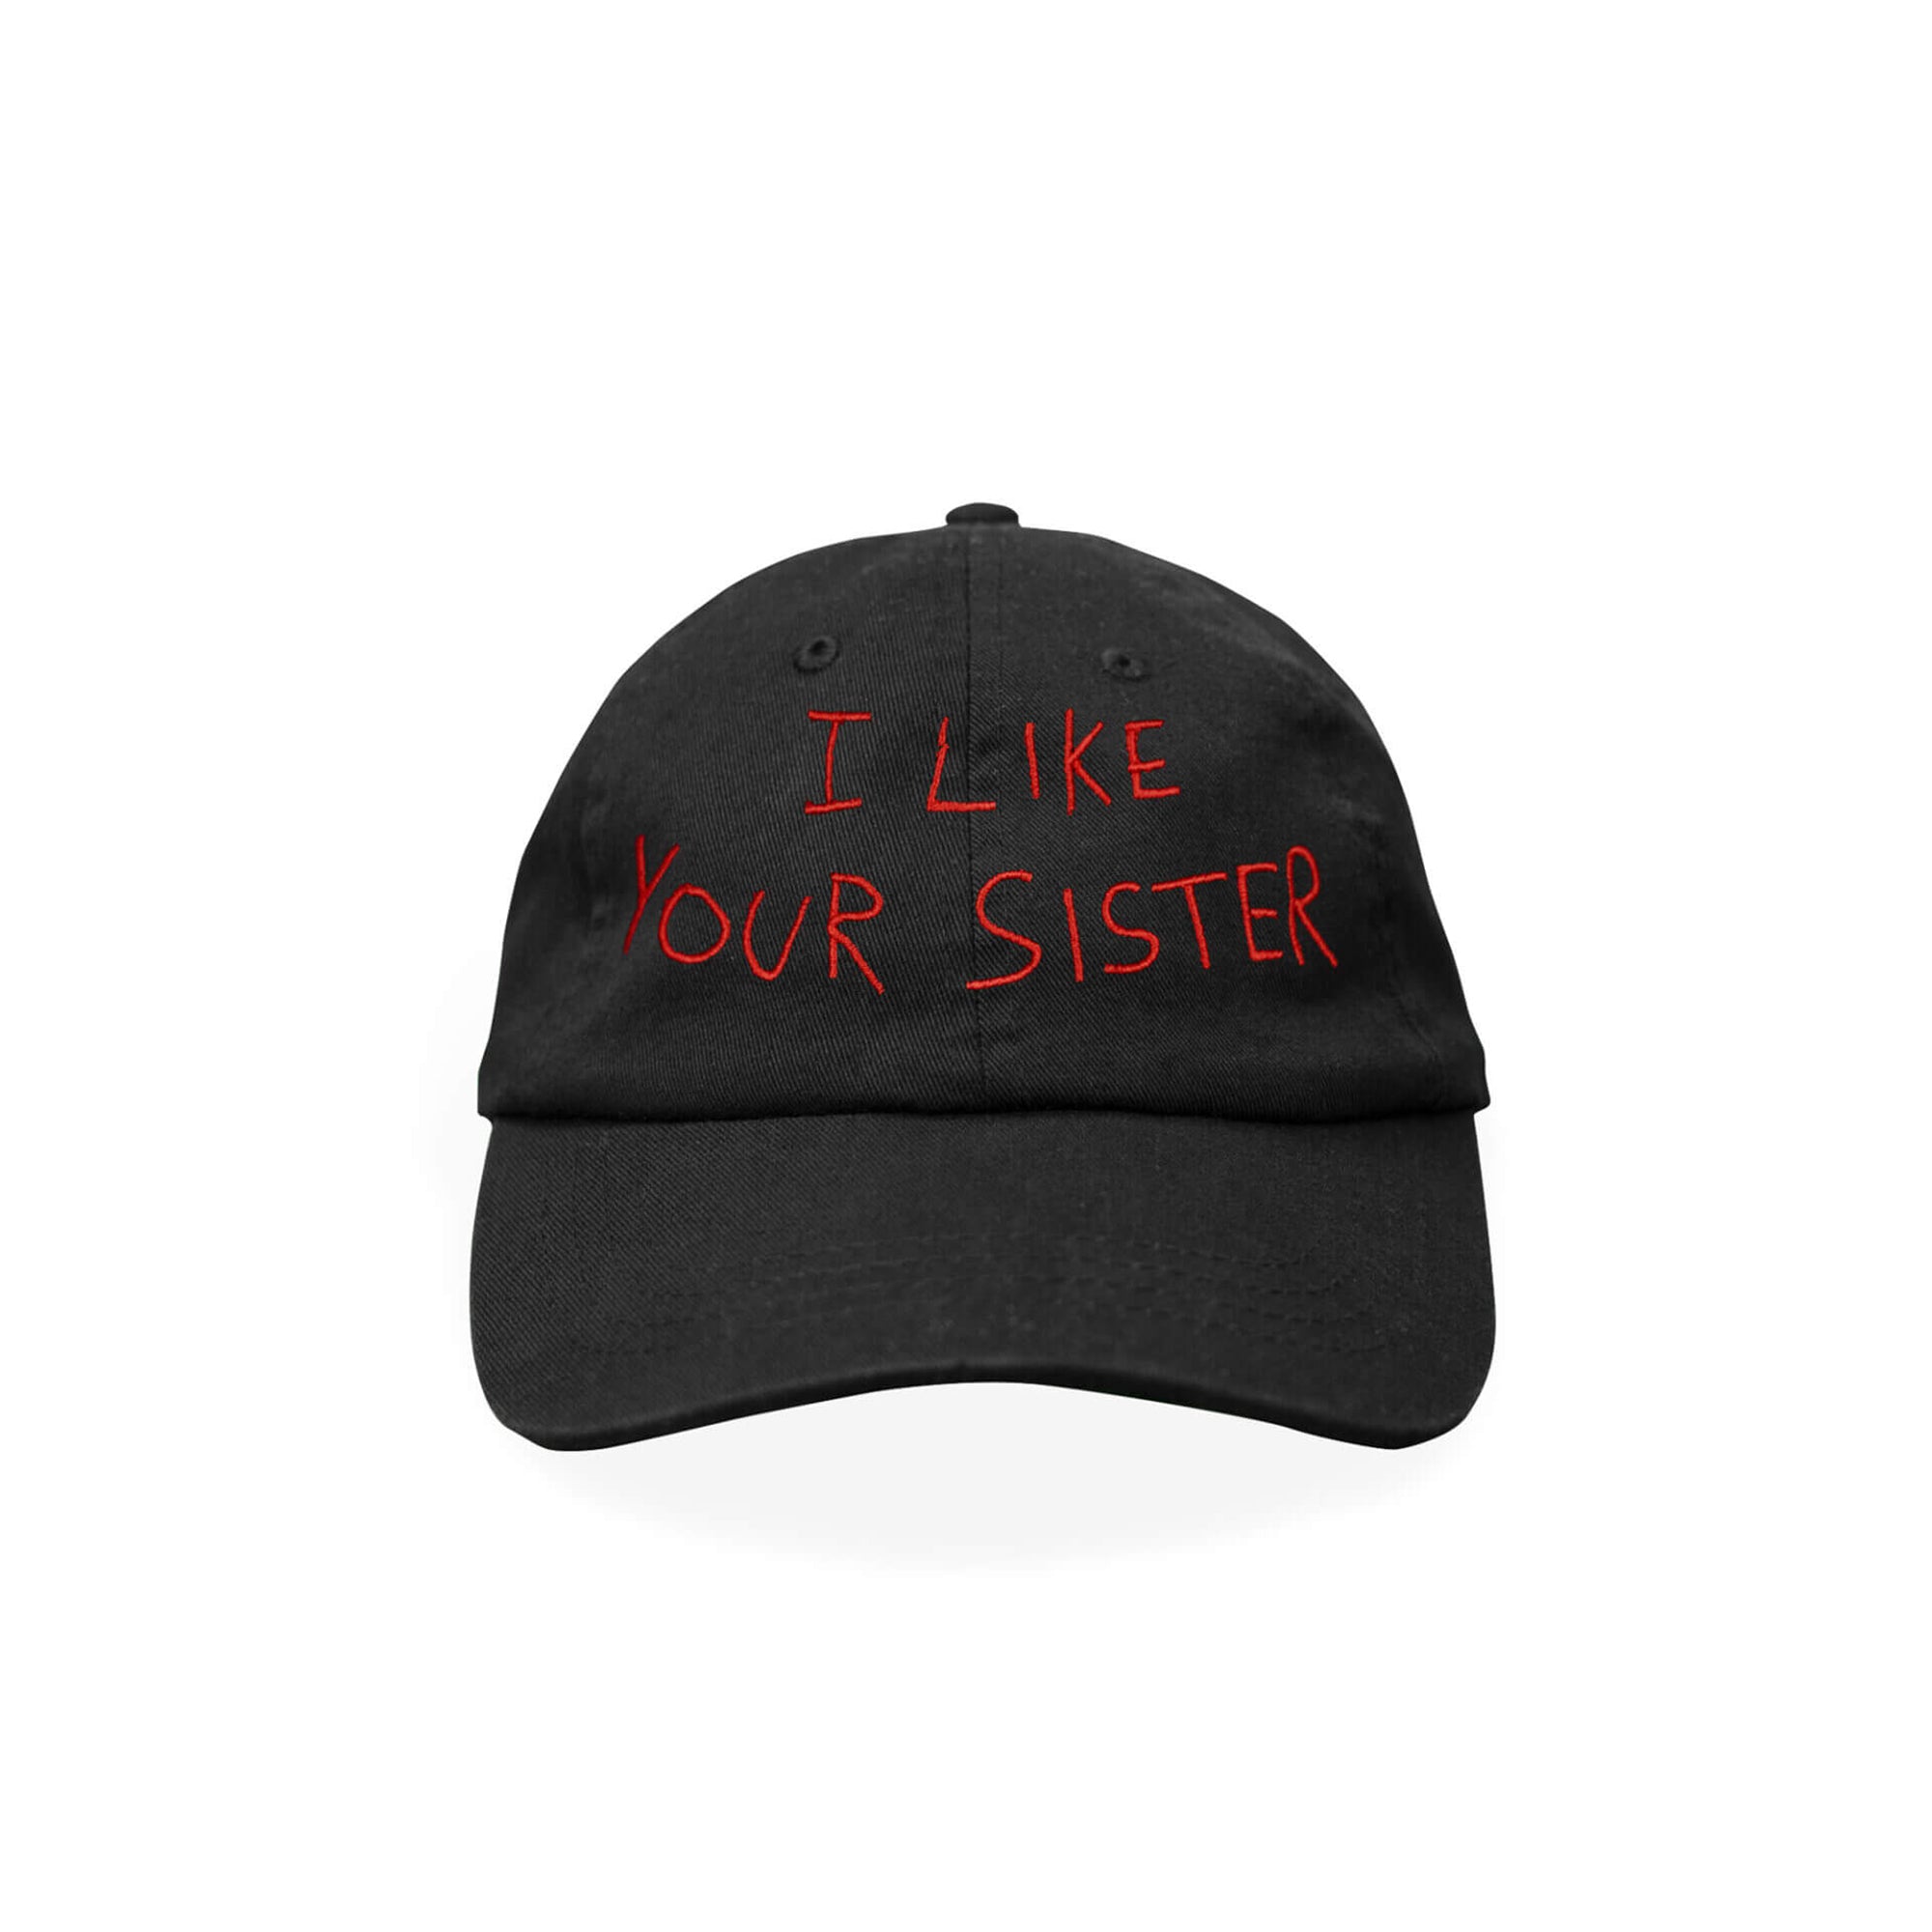 I like your sister